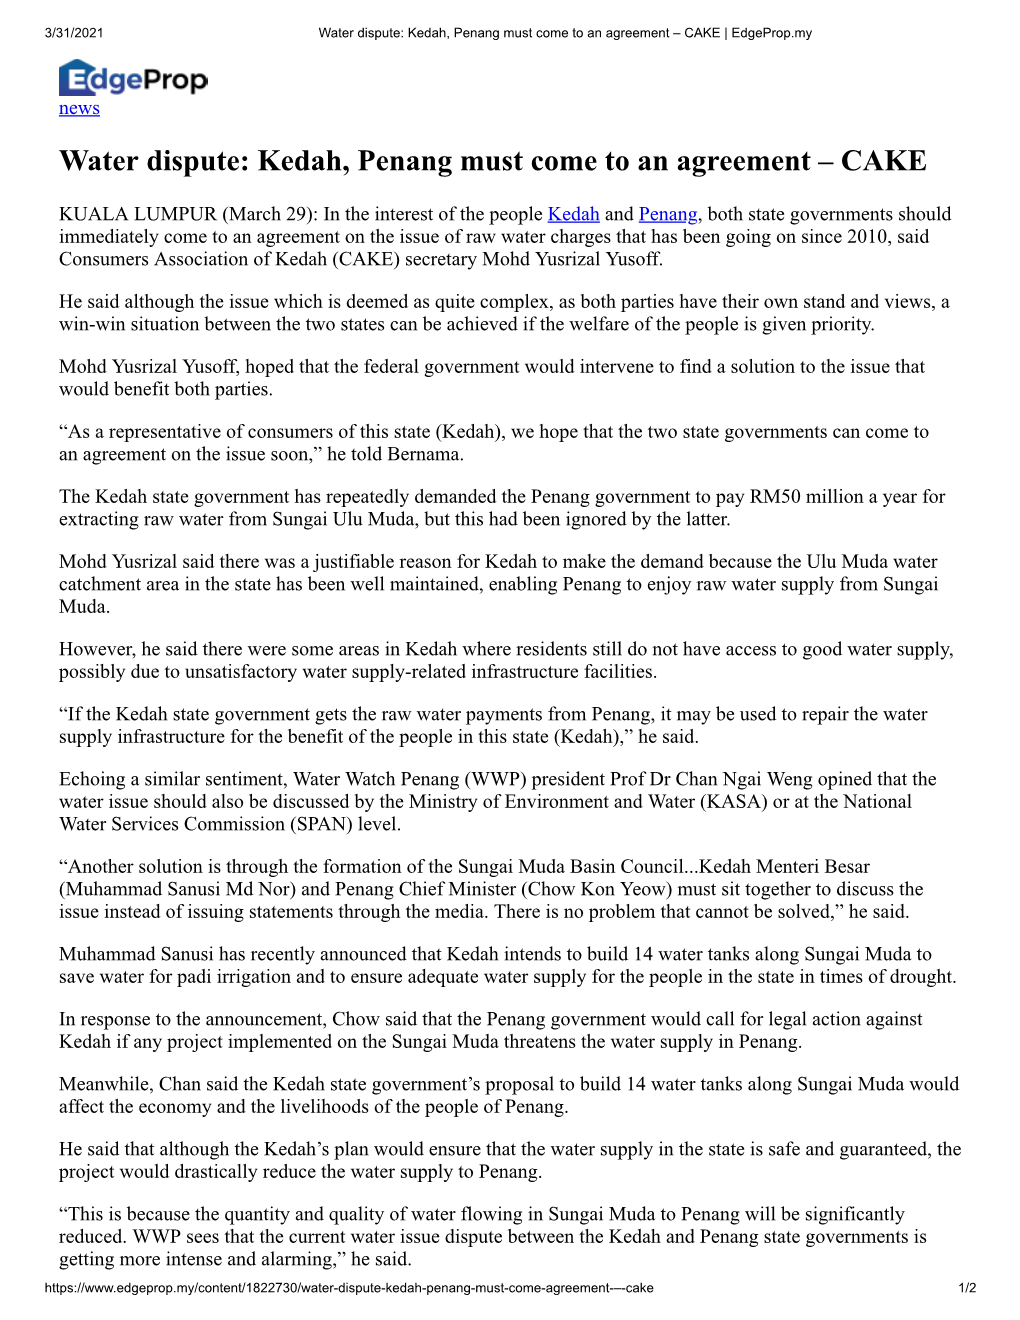 Water Dispute: Kedah, Penang Must Come to an Agreement – CAKE | Edgeprop.My